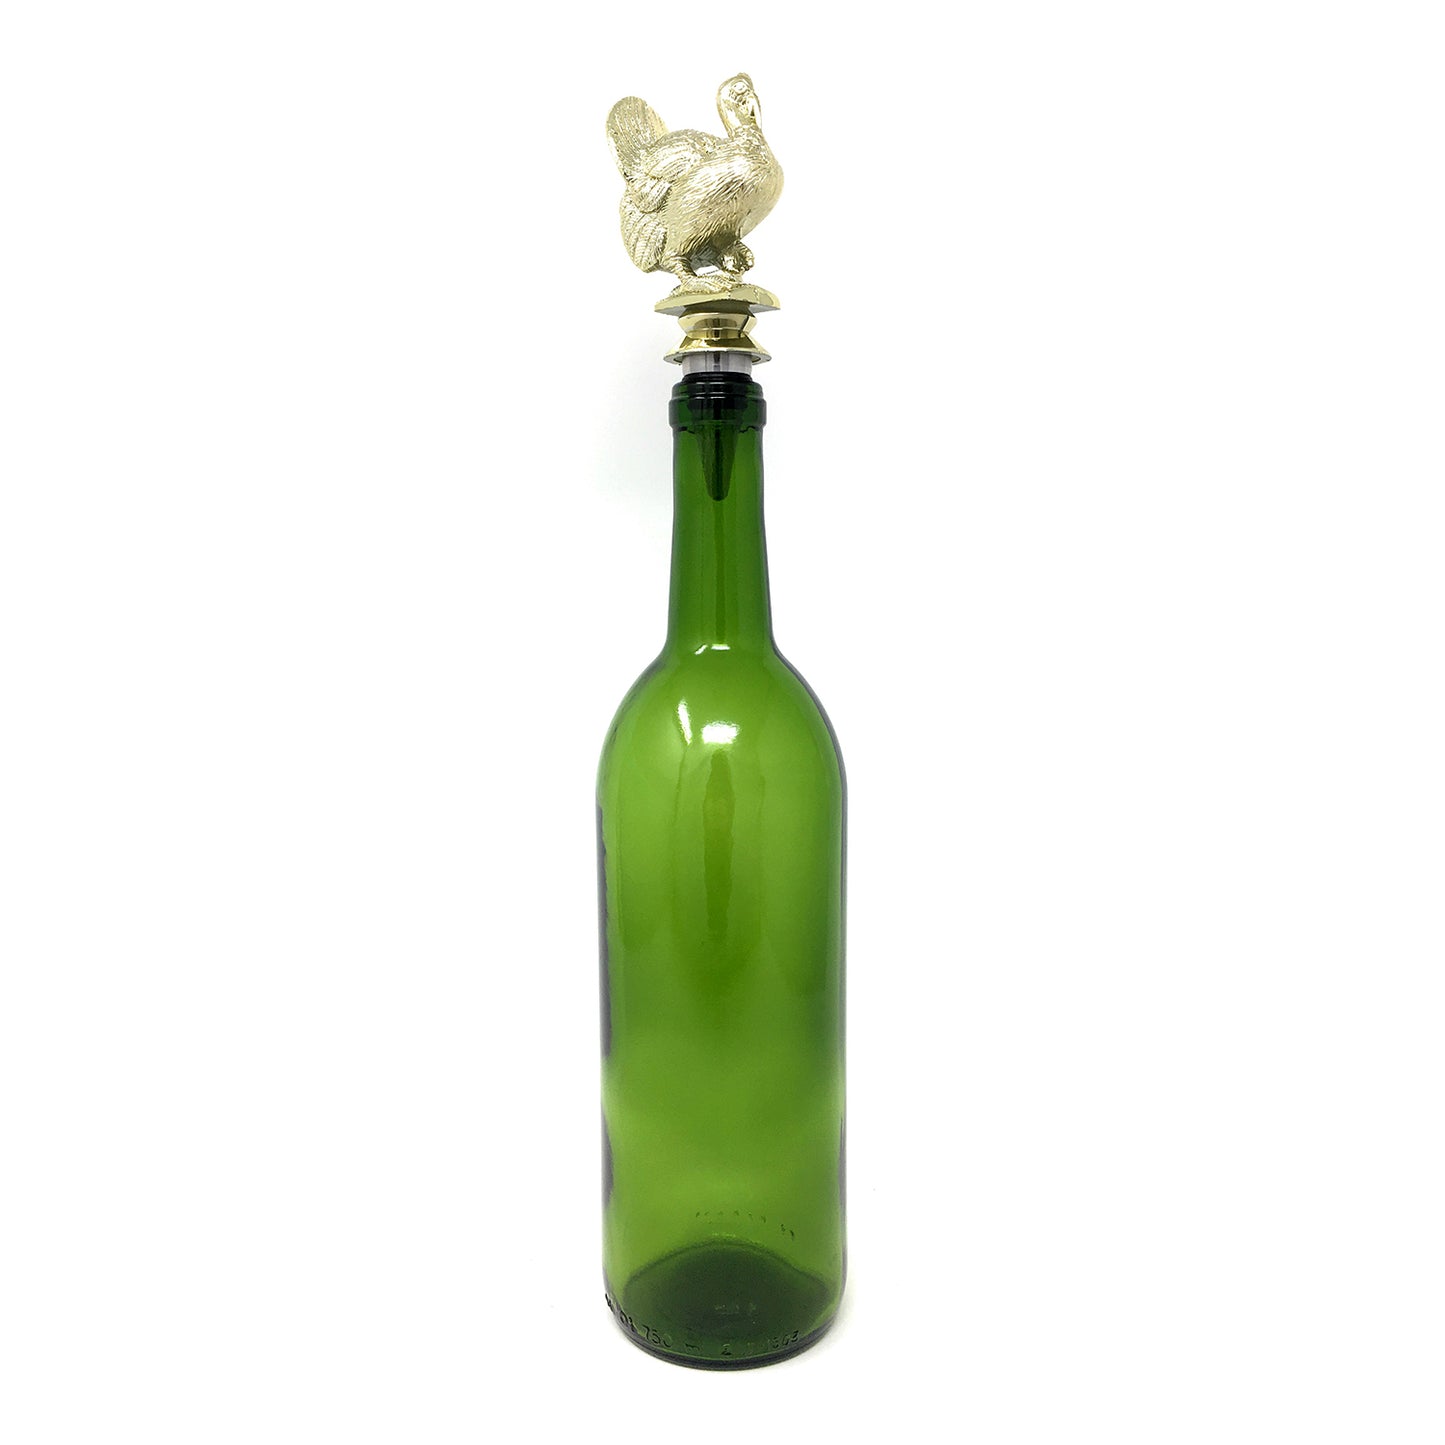 IKC Design Turkey Trophy Wine Bottle Stopper with Stainless Steel Base